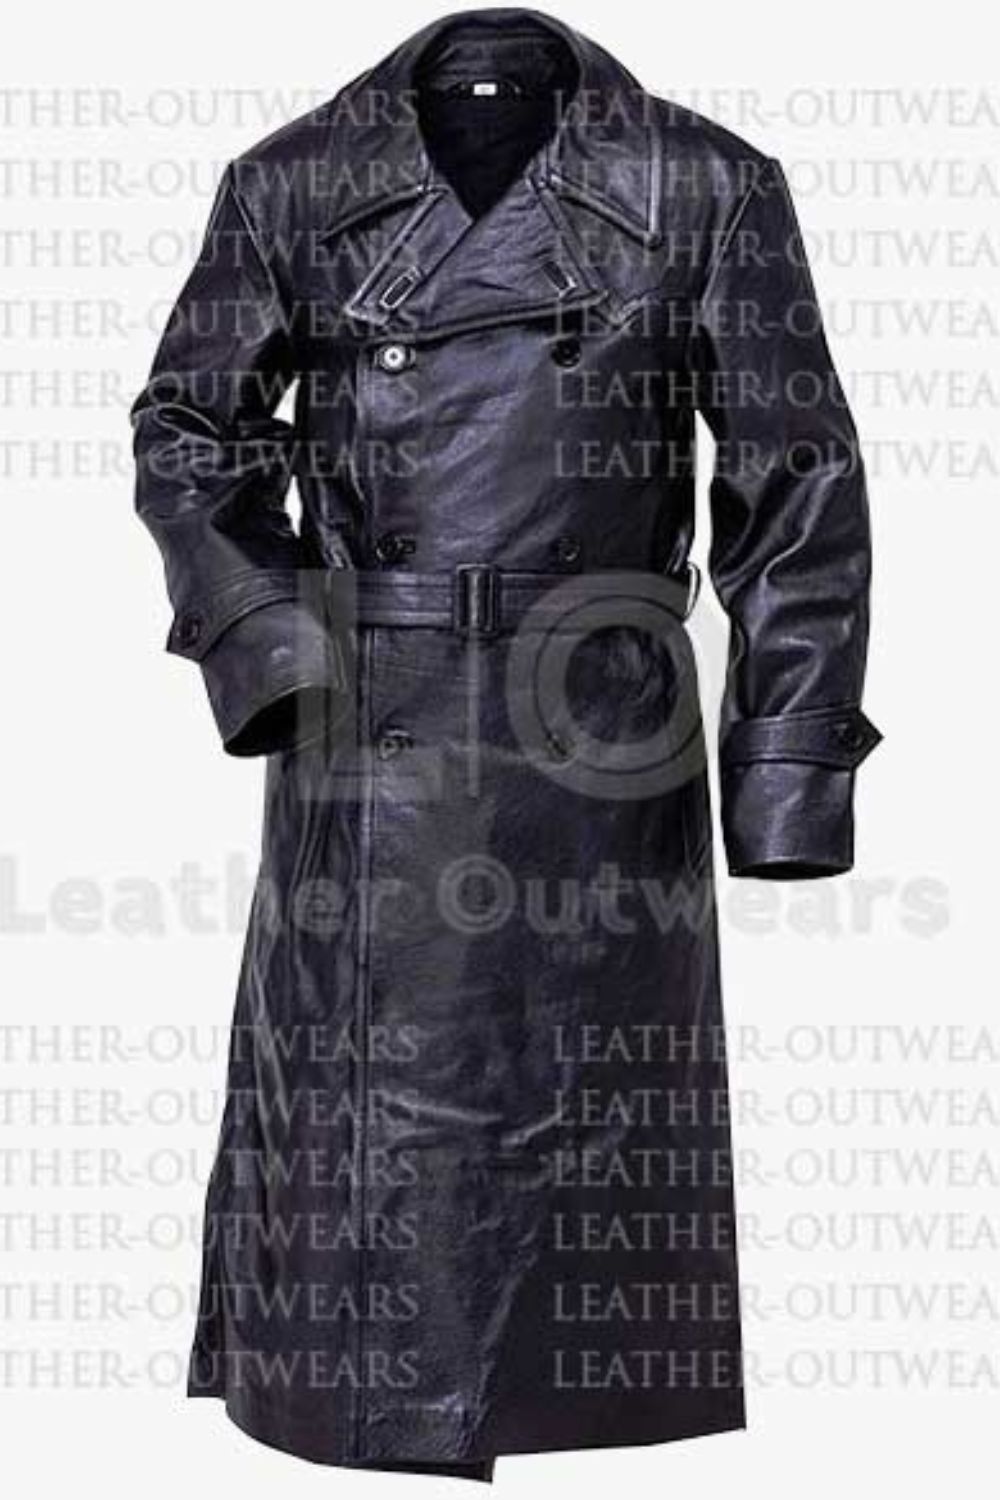 German Gestapo Trench Leather Coat by nancyclegg619 on DeviantArt